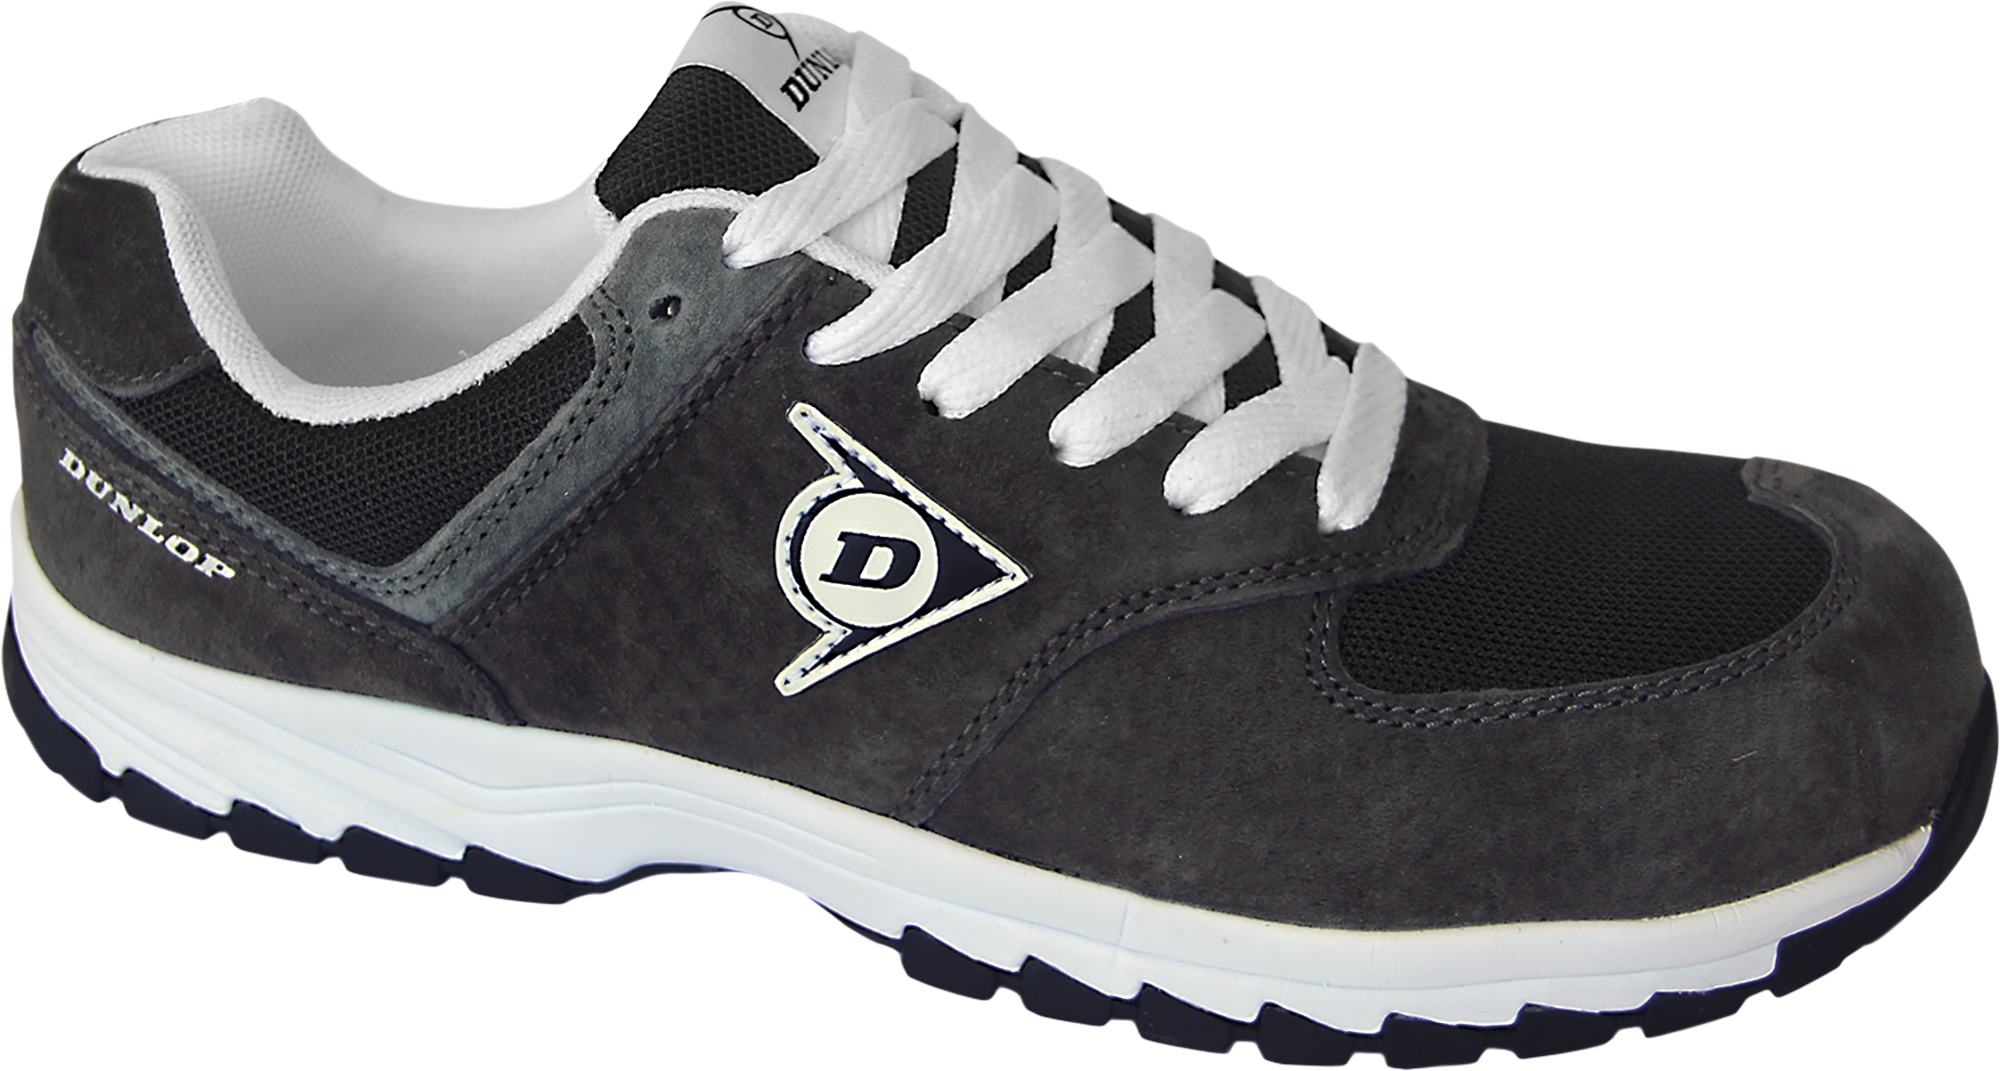 Dunlop calzado de seguridad, deportivo s3 modelo flying arrow color gris - tall